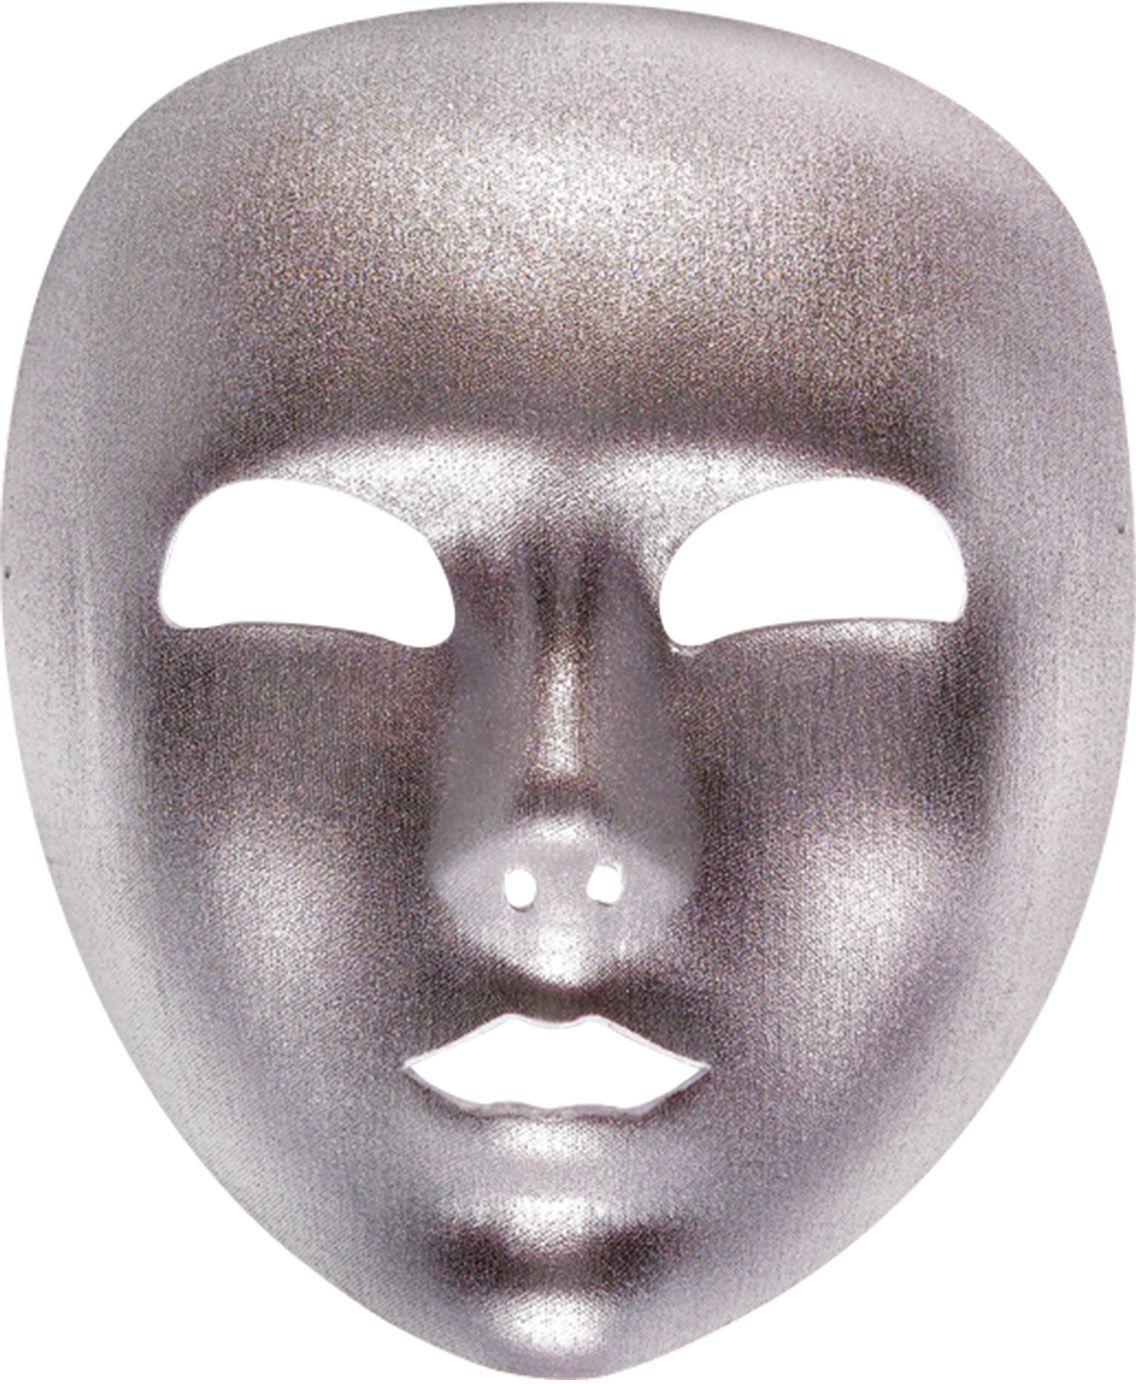 Venetiaanse carnaval masker zilver